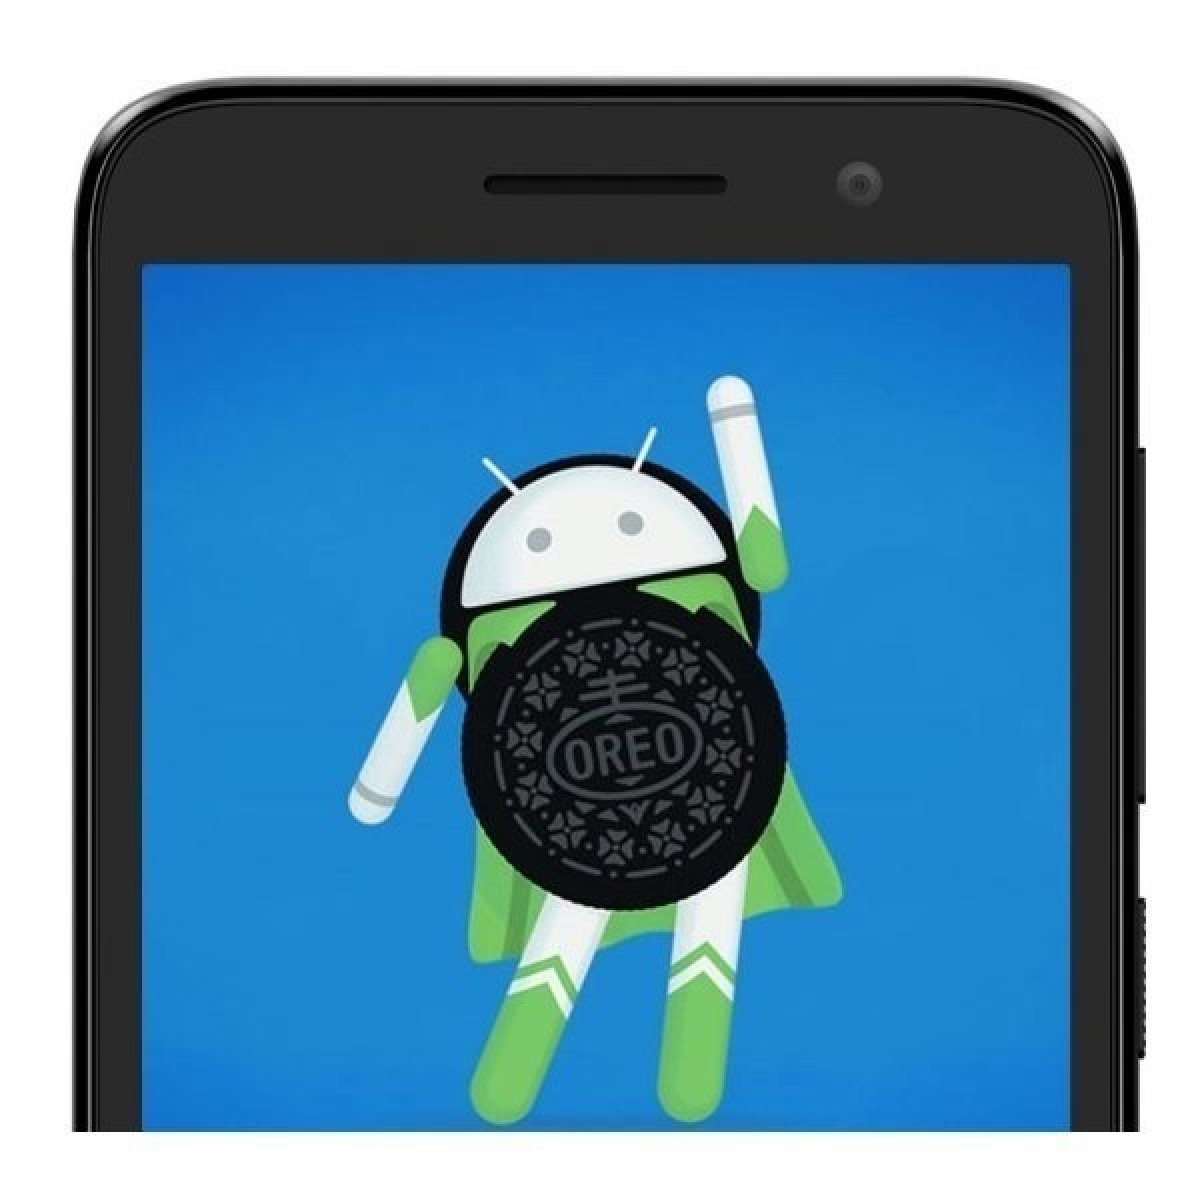 Android Oreo GO Edition